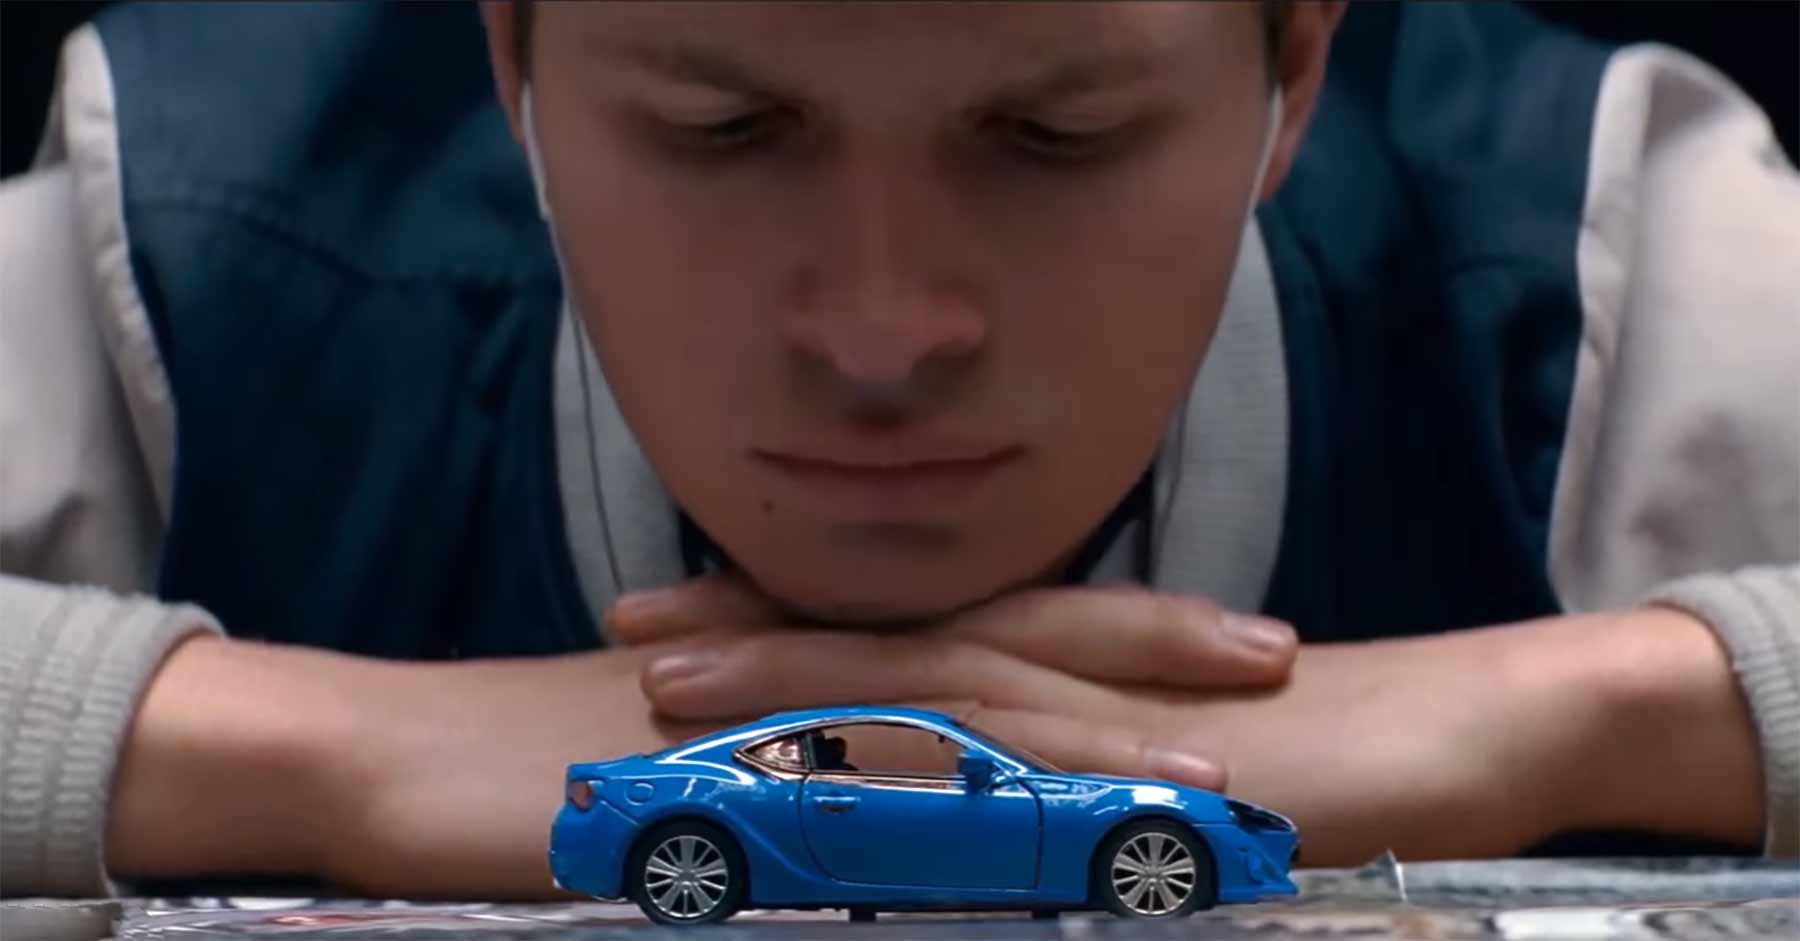 Honest Trailer: Baby Driver